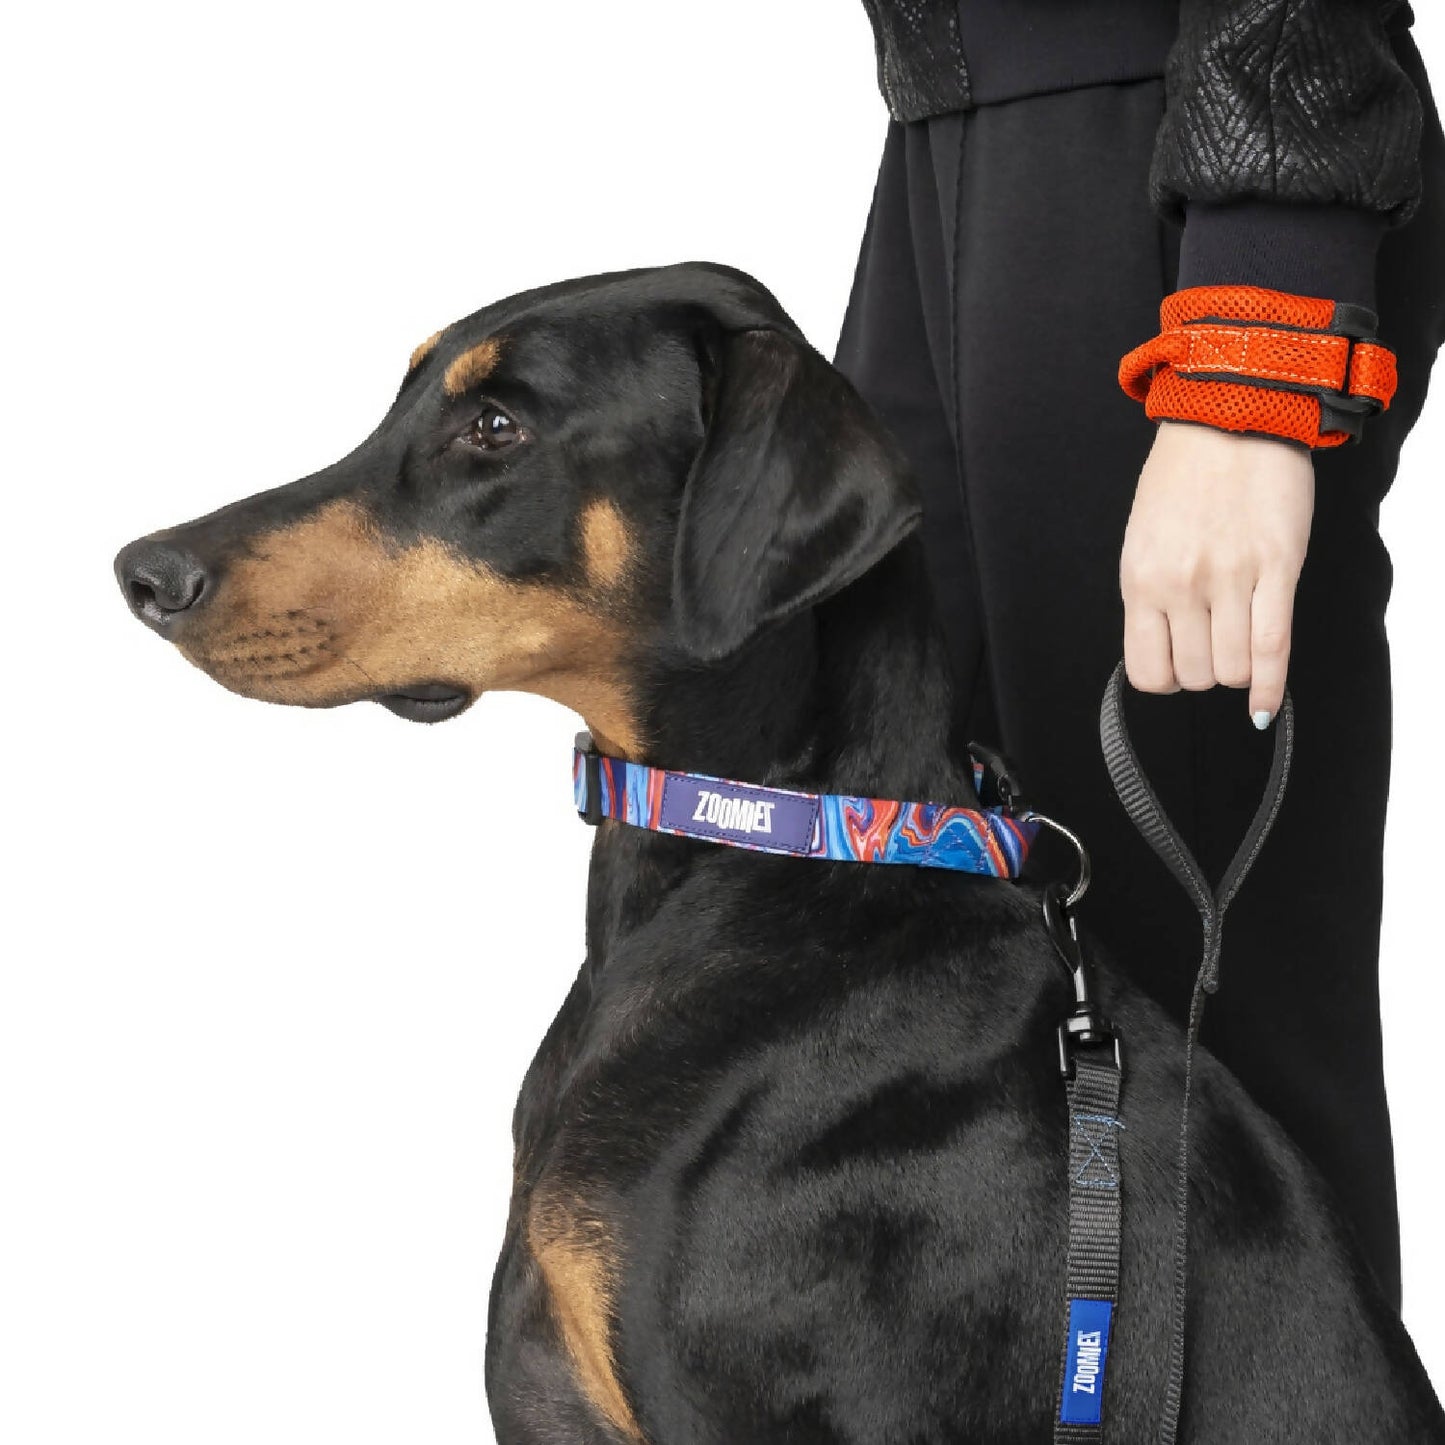 Zoomiez - Hands-Free Dog Leash/Lead